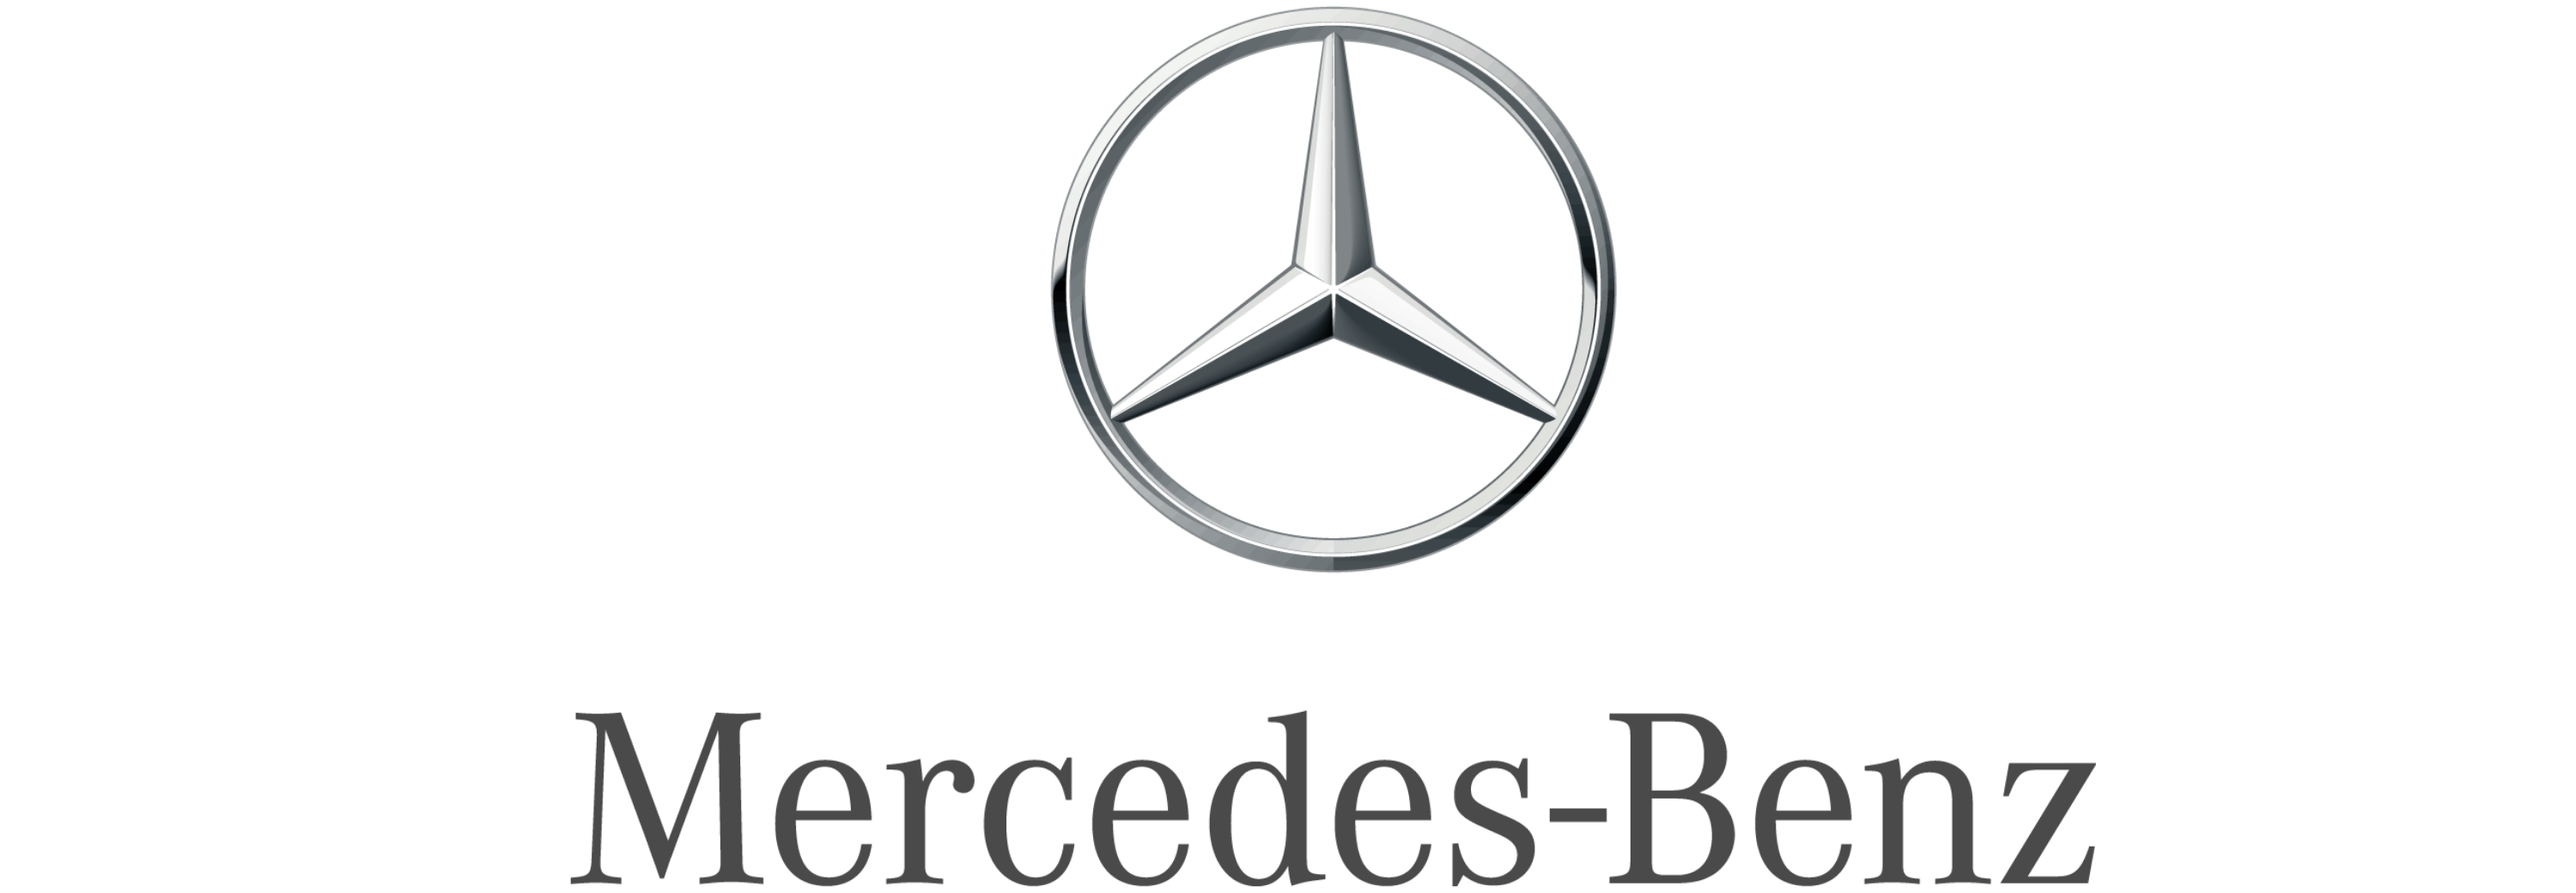  Buy Mercedes-Benz Club Black Eau de Toilette (100ml) online in  India on Foxy. Free shipping, watch expert reviews.